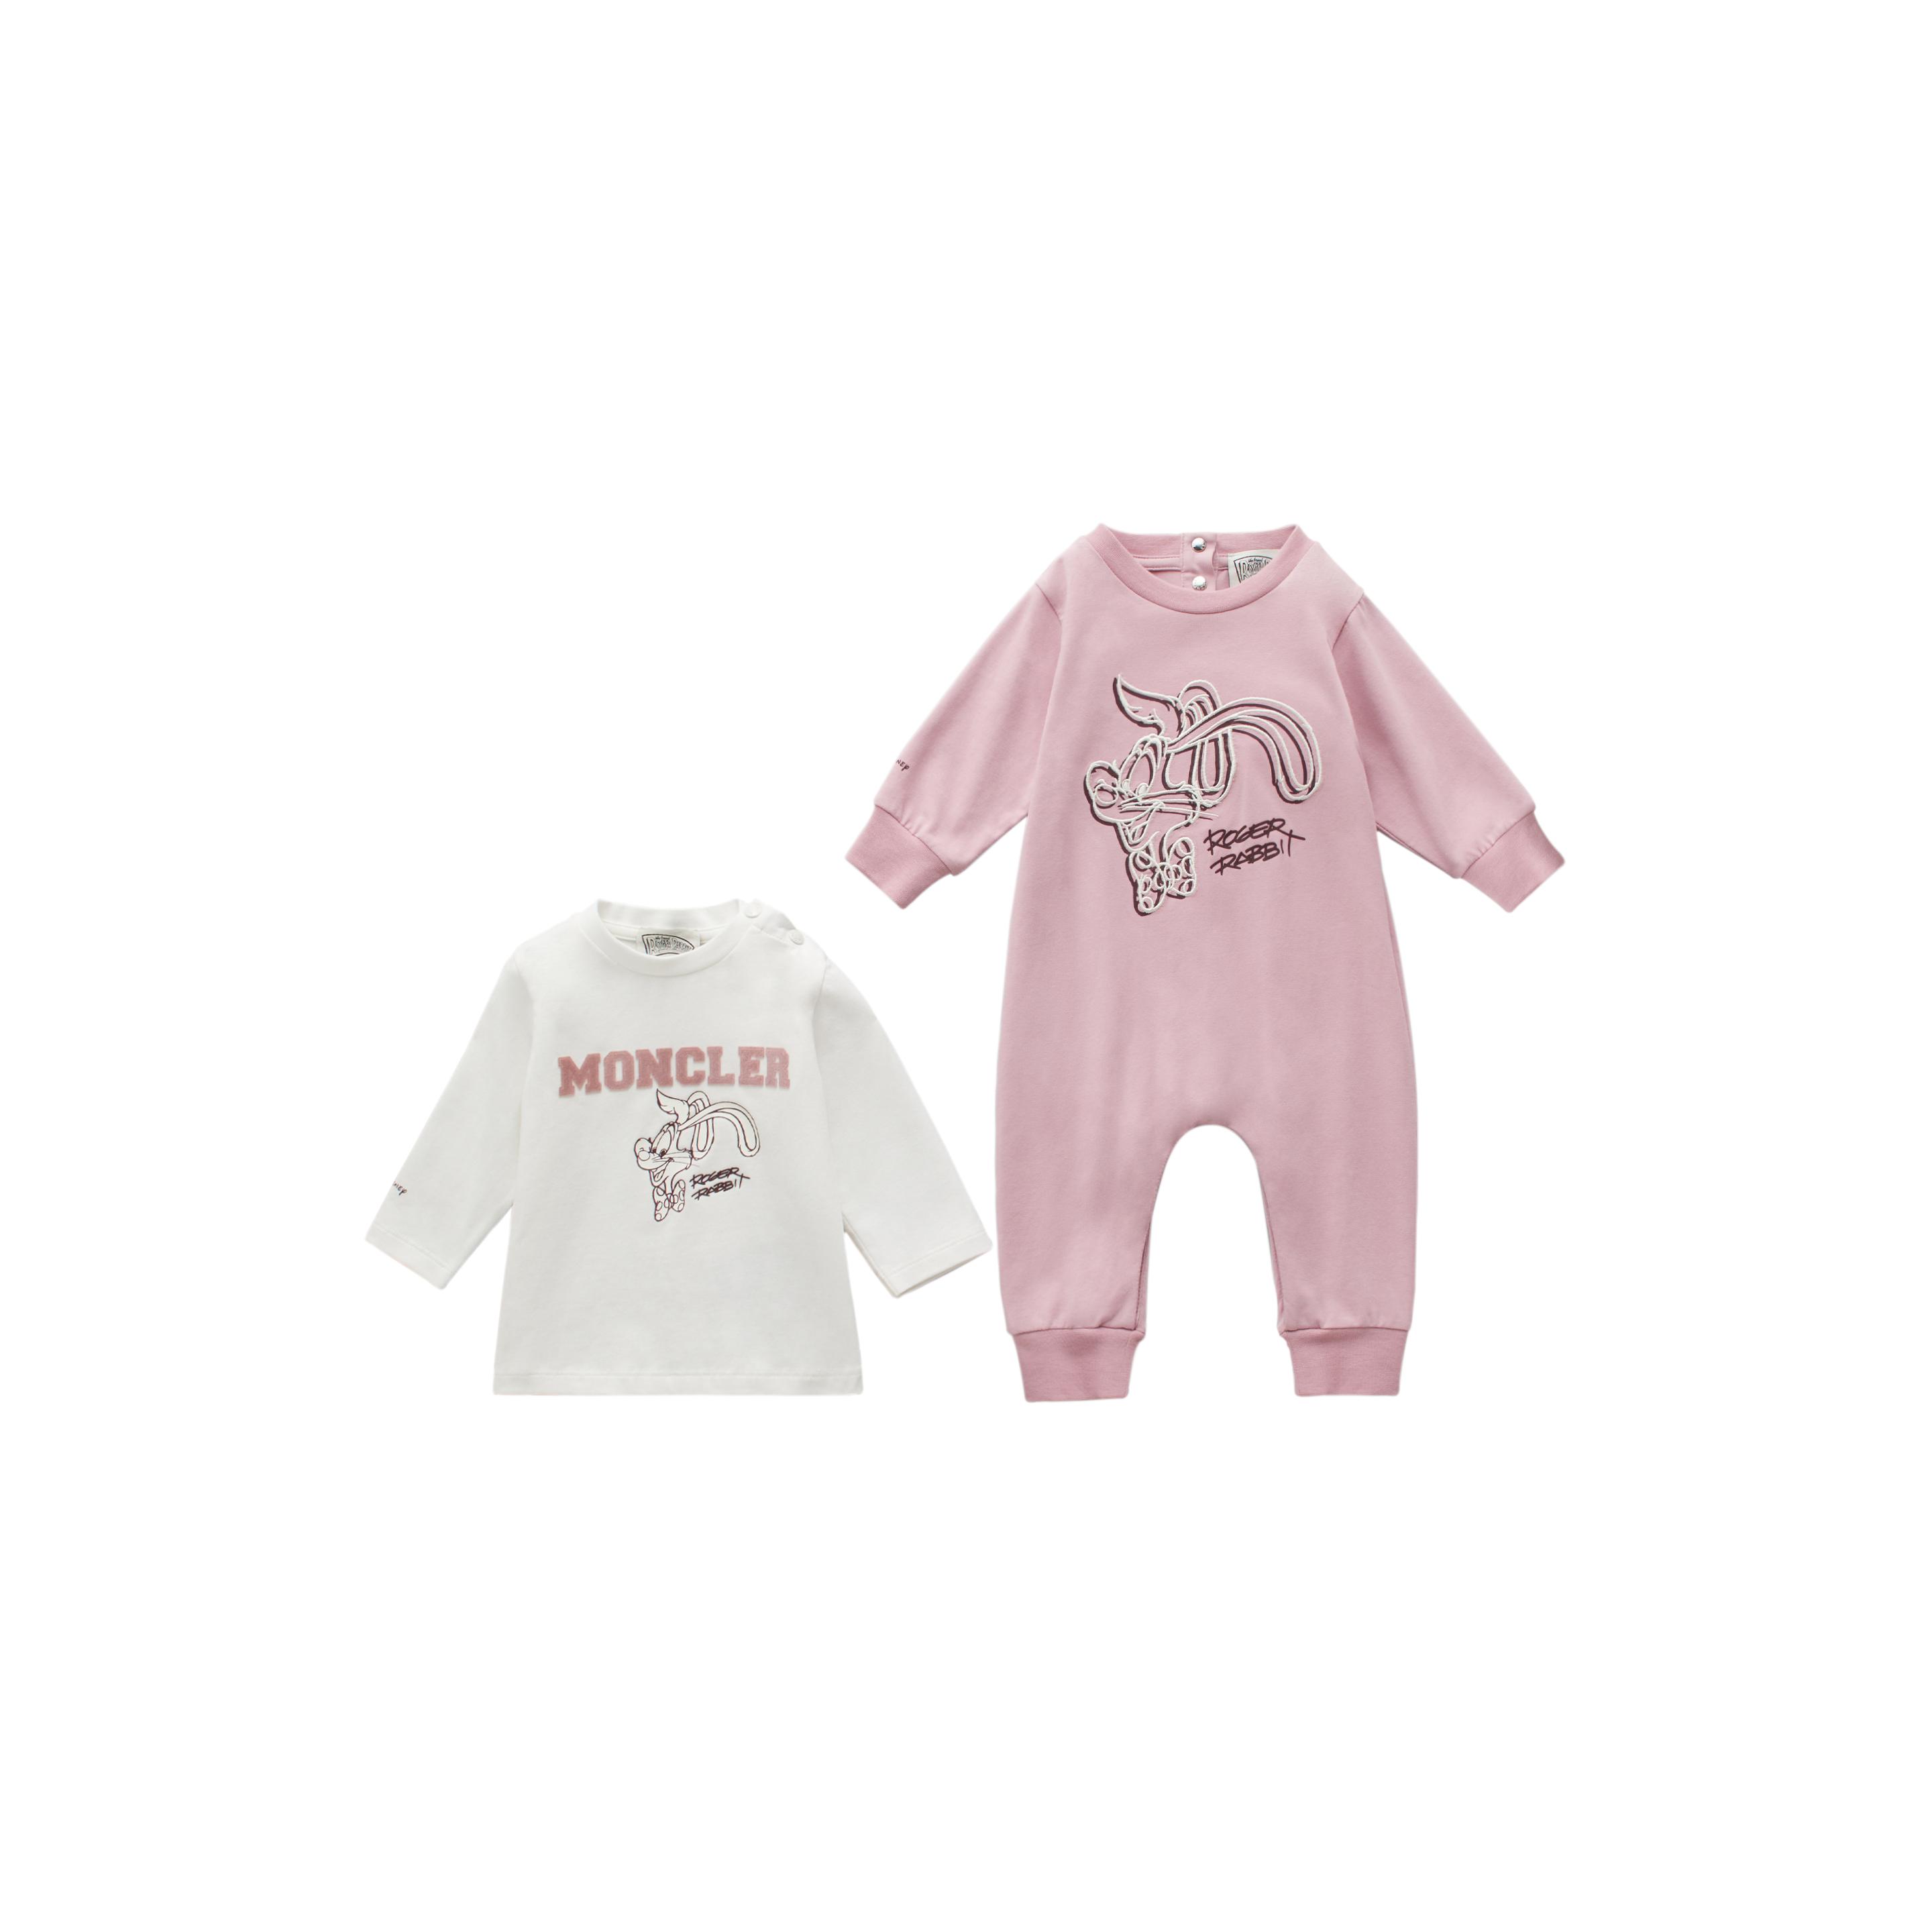 Moncler Baby Grow Set Pink | Lyst